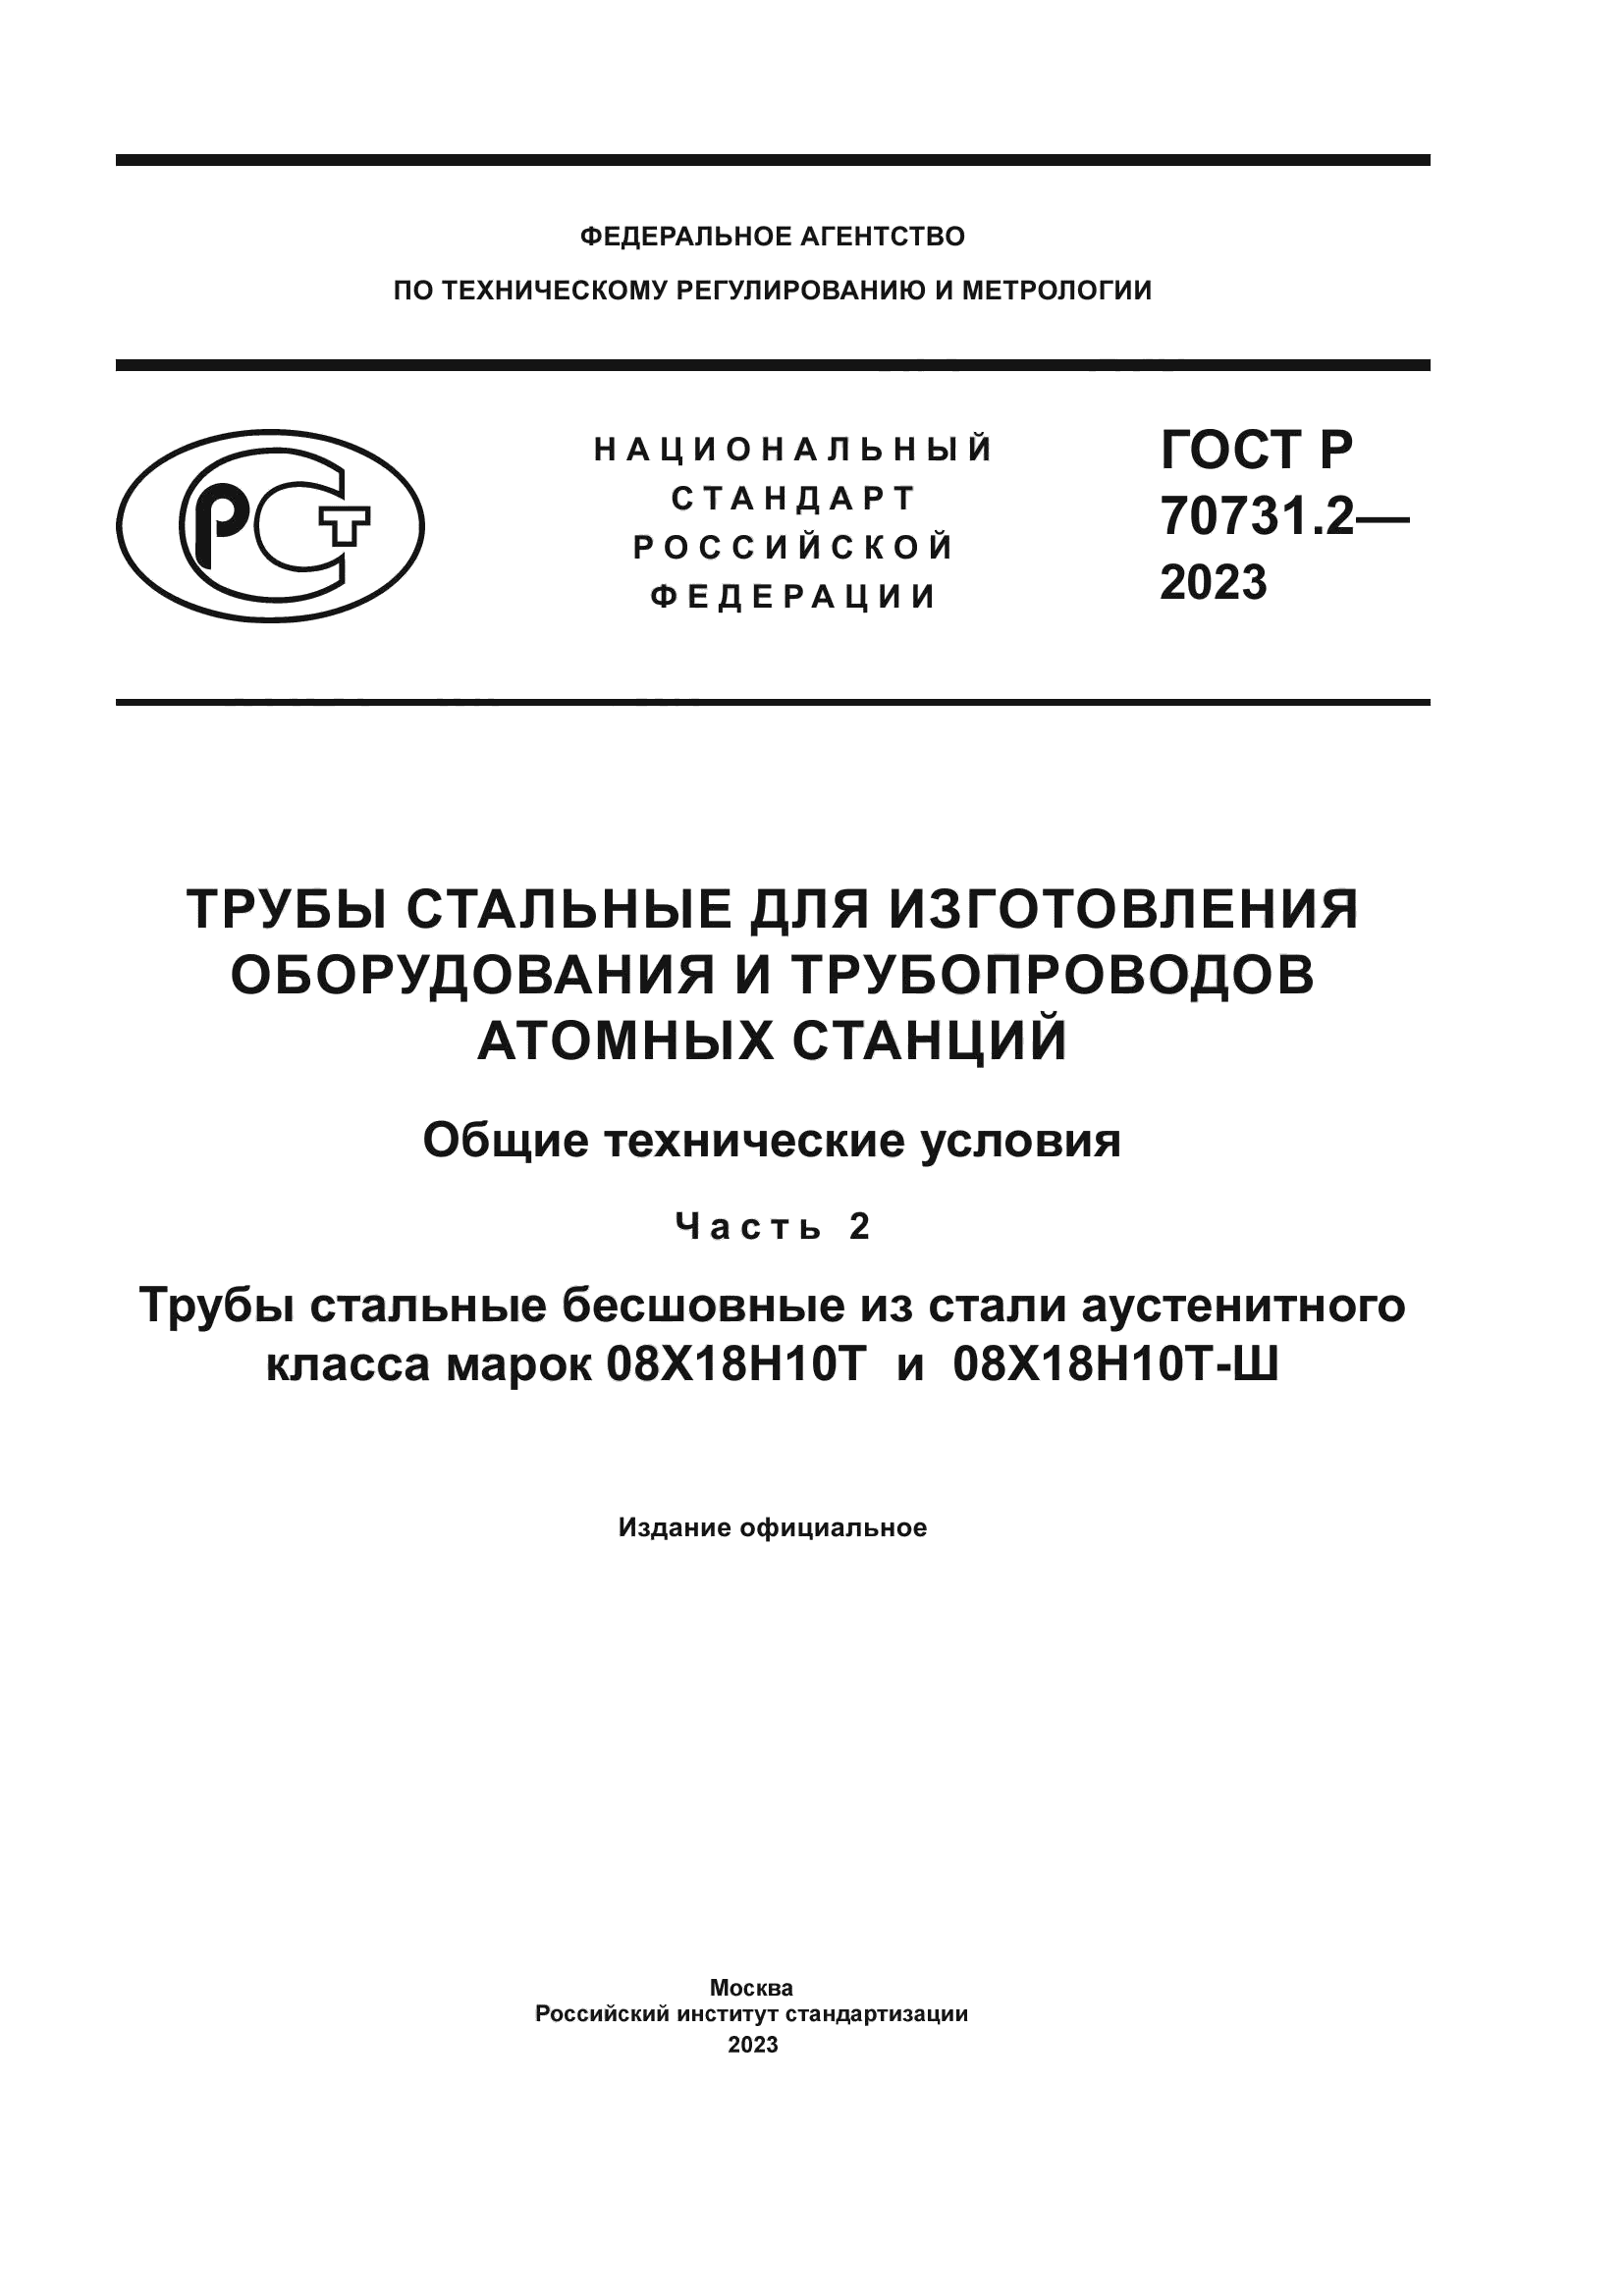 ГОСТ Р 70731.2-2023